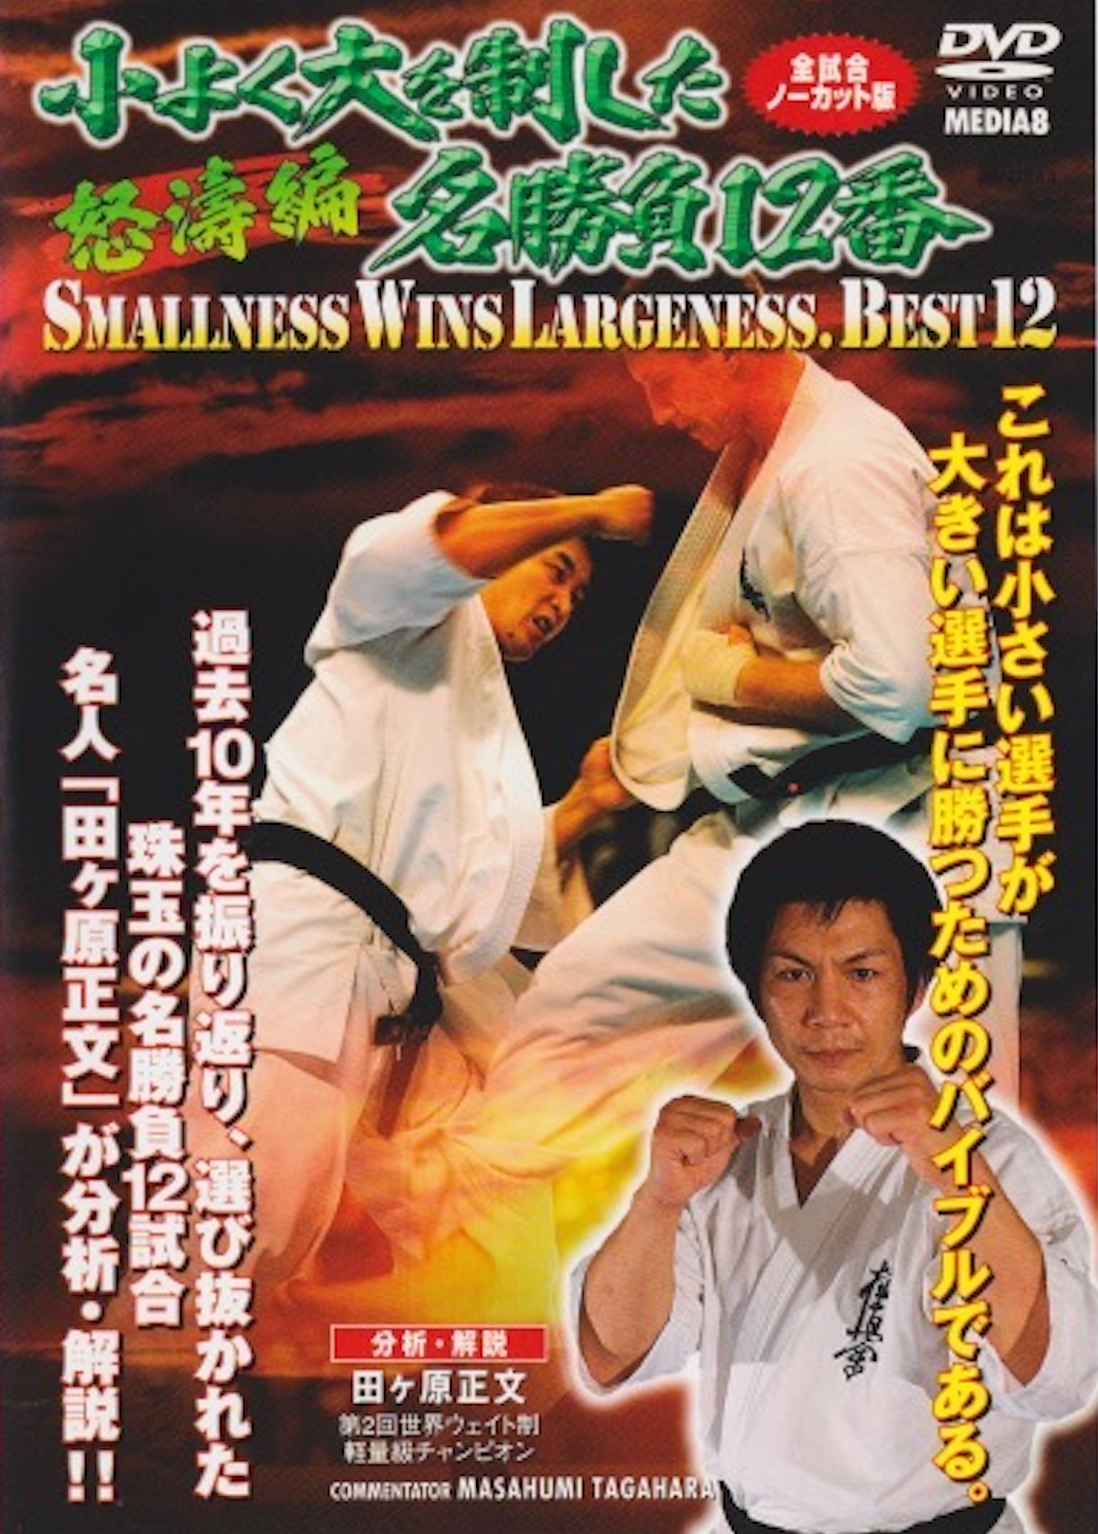 Kyokushin Karate: The Small Beats the Large DVD